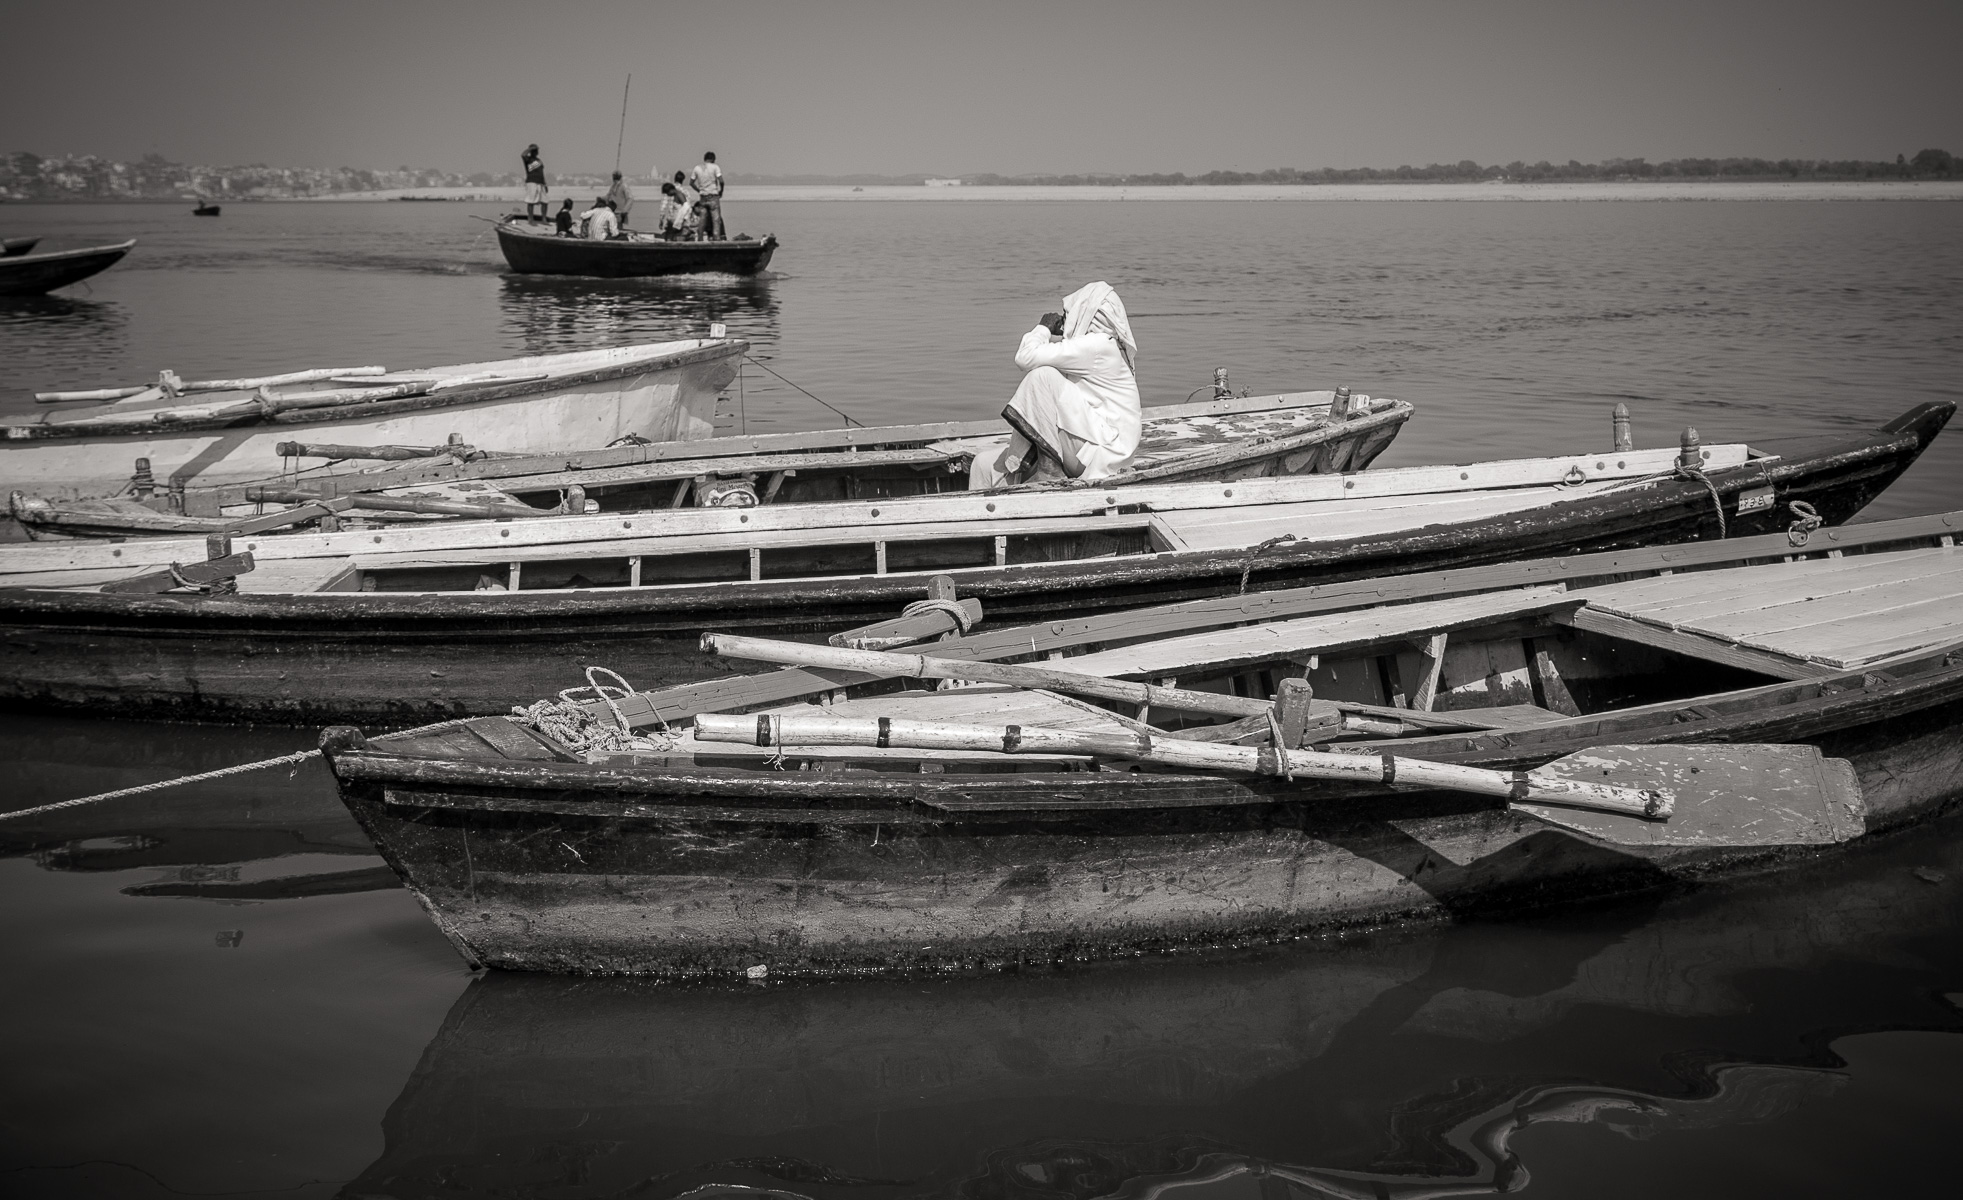 Boats on the Ganges, Varanasai